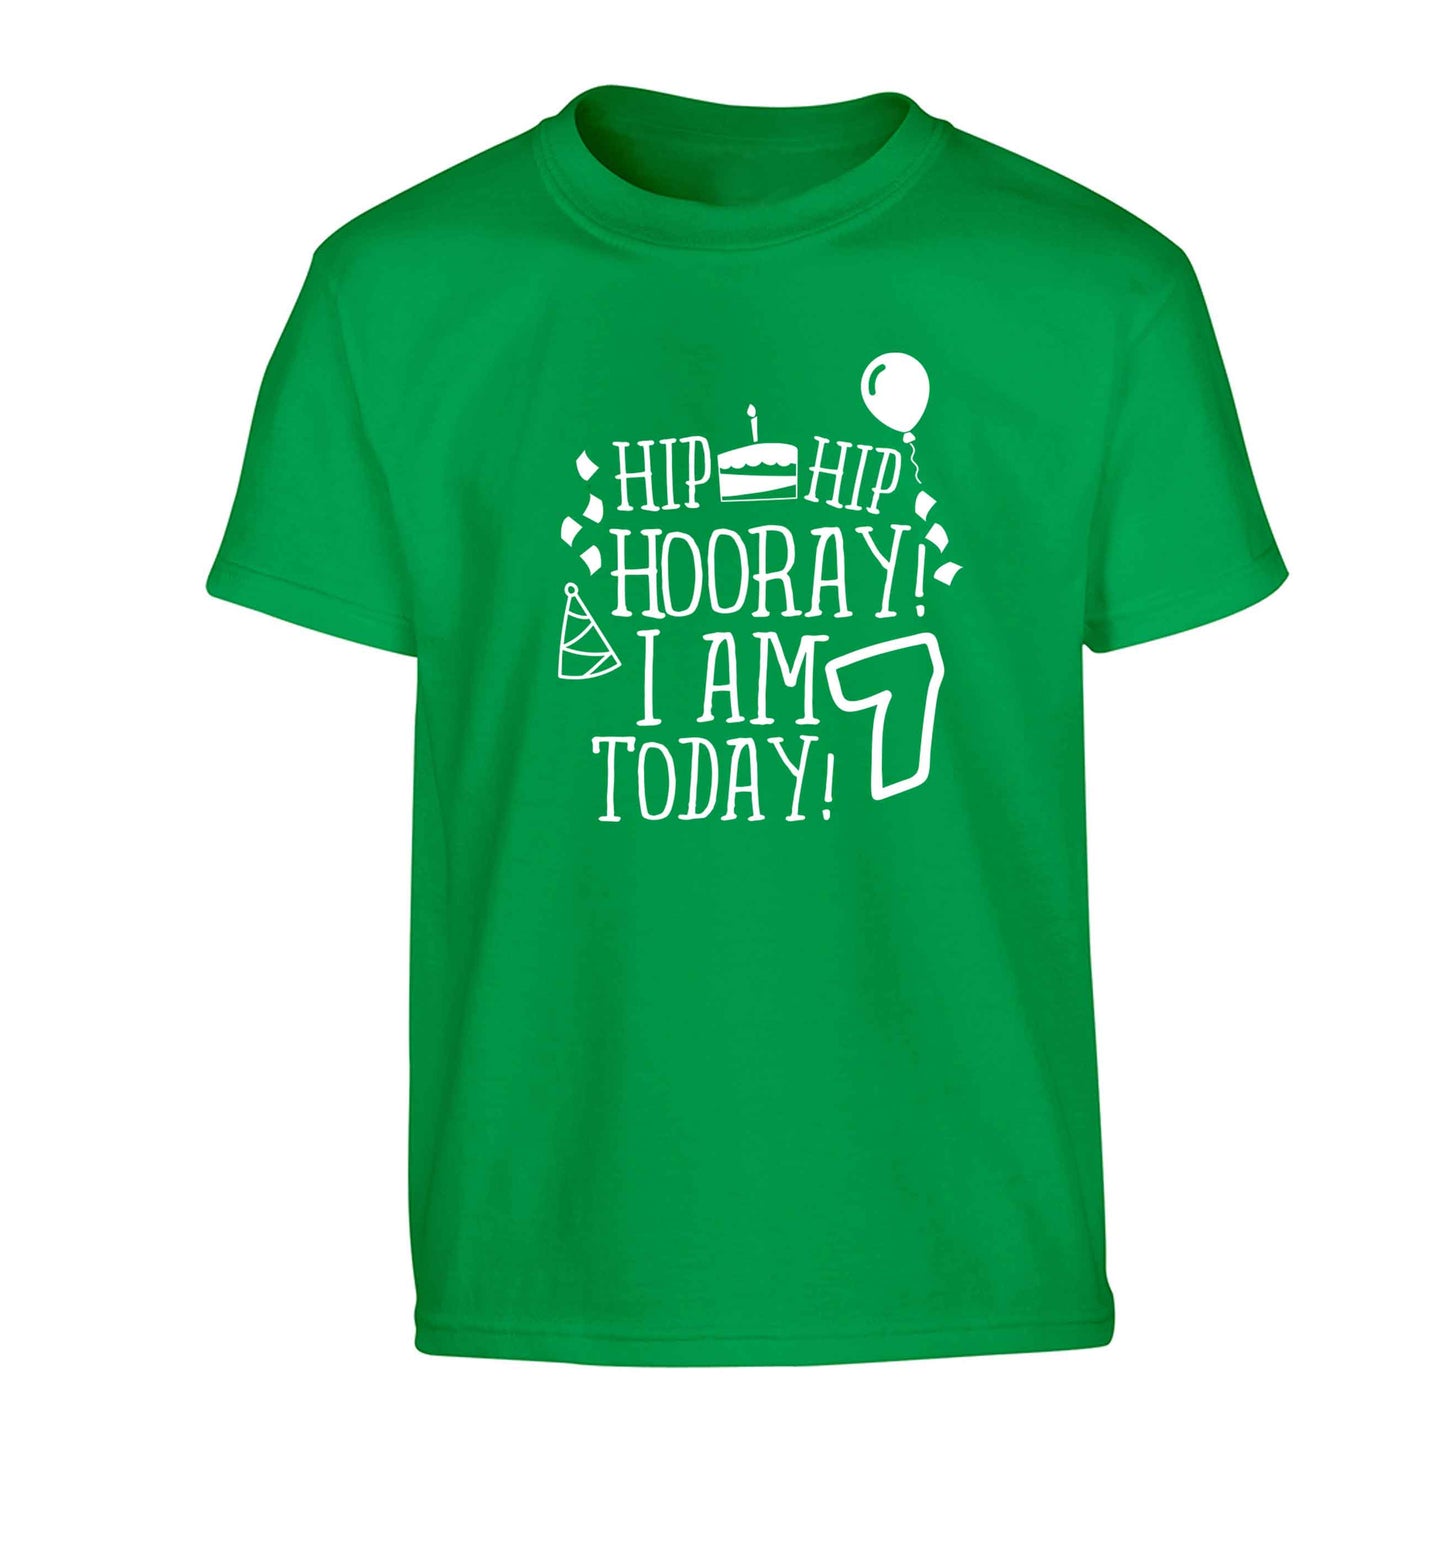 Hip hip I am seven today! Children's green Tshirt 12-13 Years